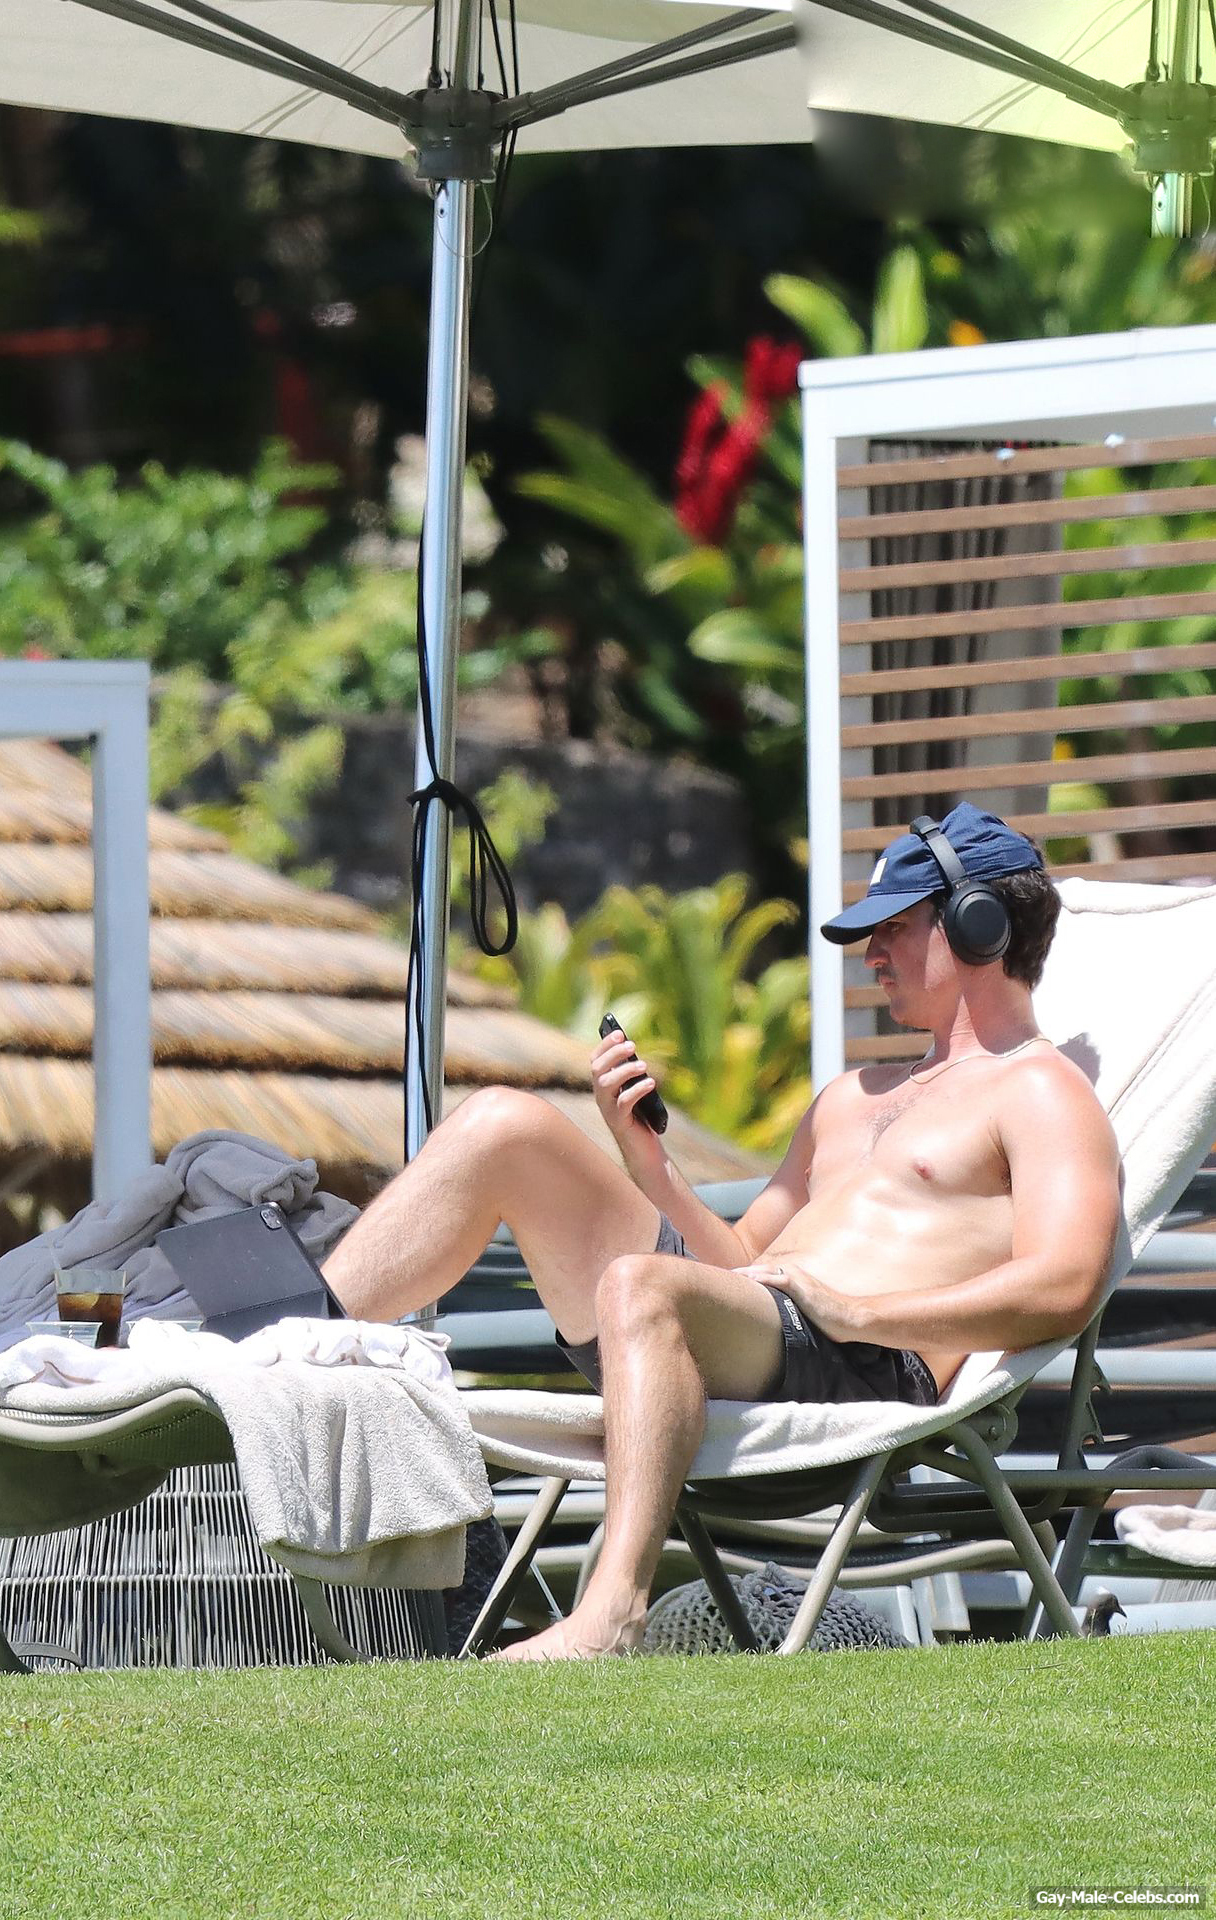 Miles Teller Caught Sunbathing Shirtless